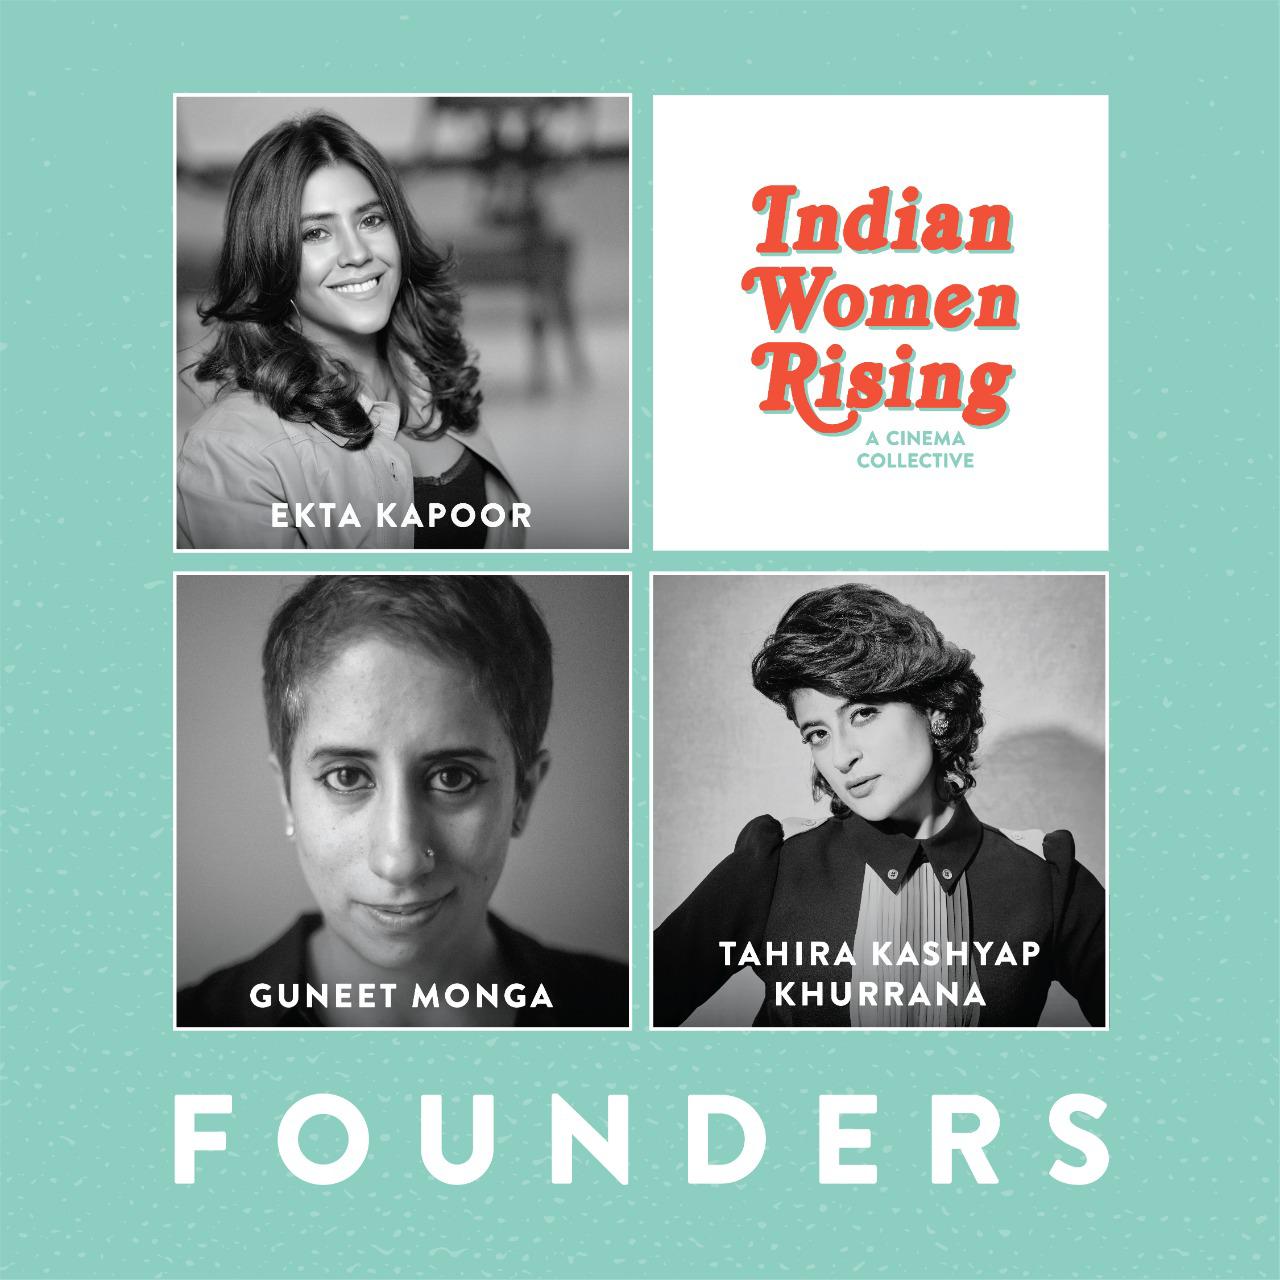 Ekta Kapoor, Guneet Monga and Tahira Kashyap Khurrana come together to launch Indian Women Rising, a cinema collective